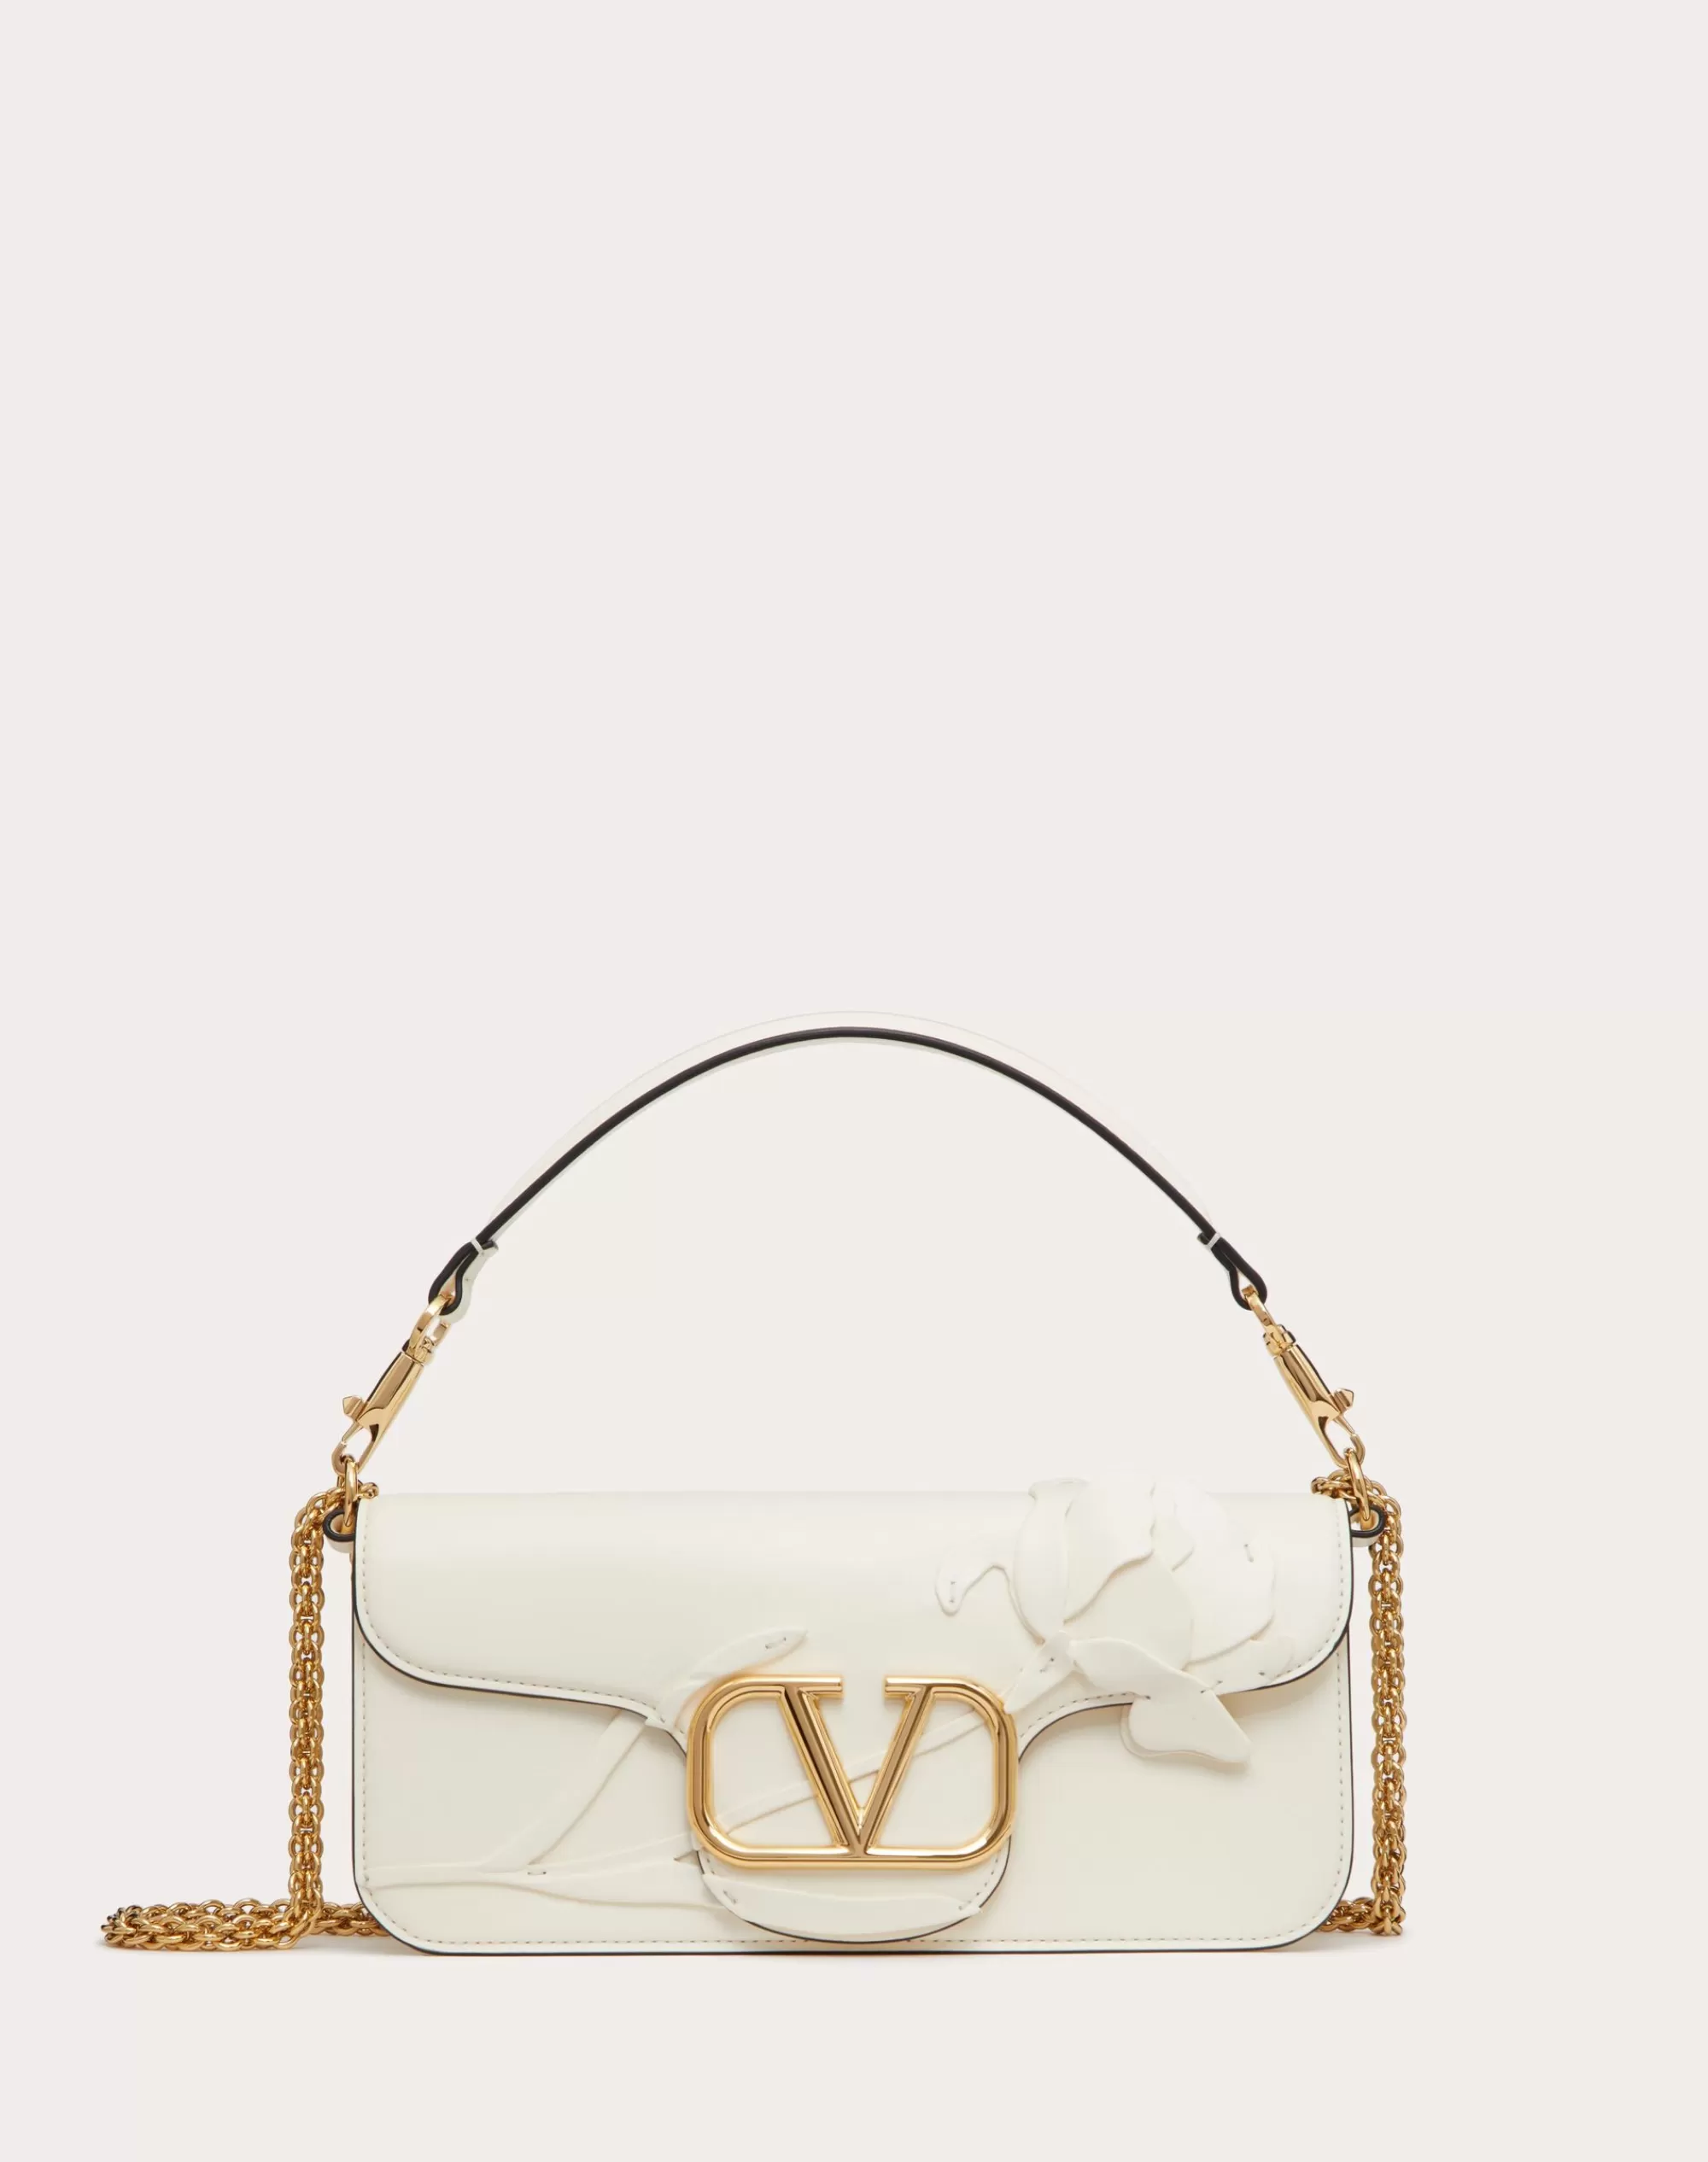 Valentino LOCÒ SHOULDER BAG WITH APPLIQUE FLOWERS Ivory Flash Sale